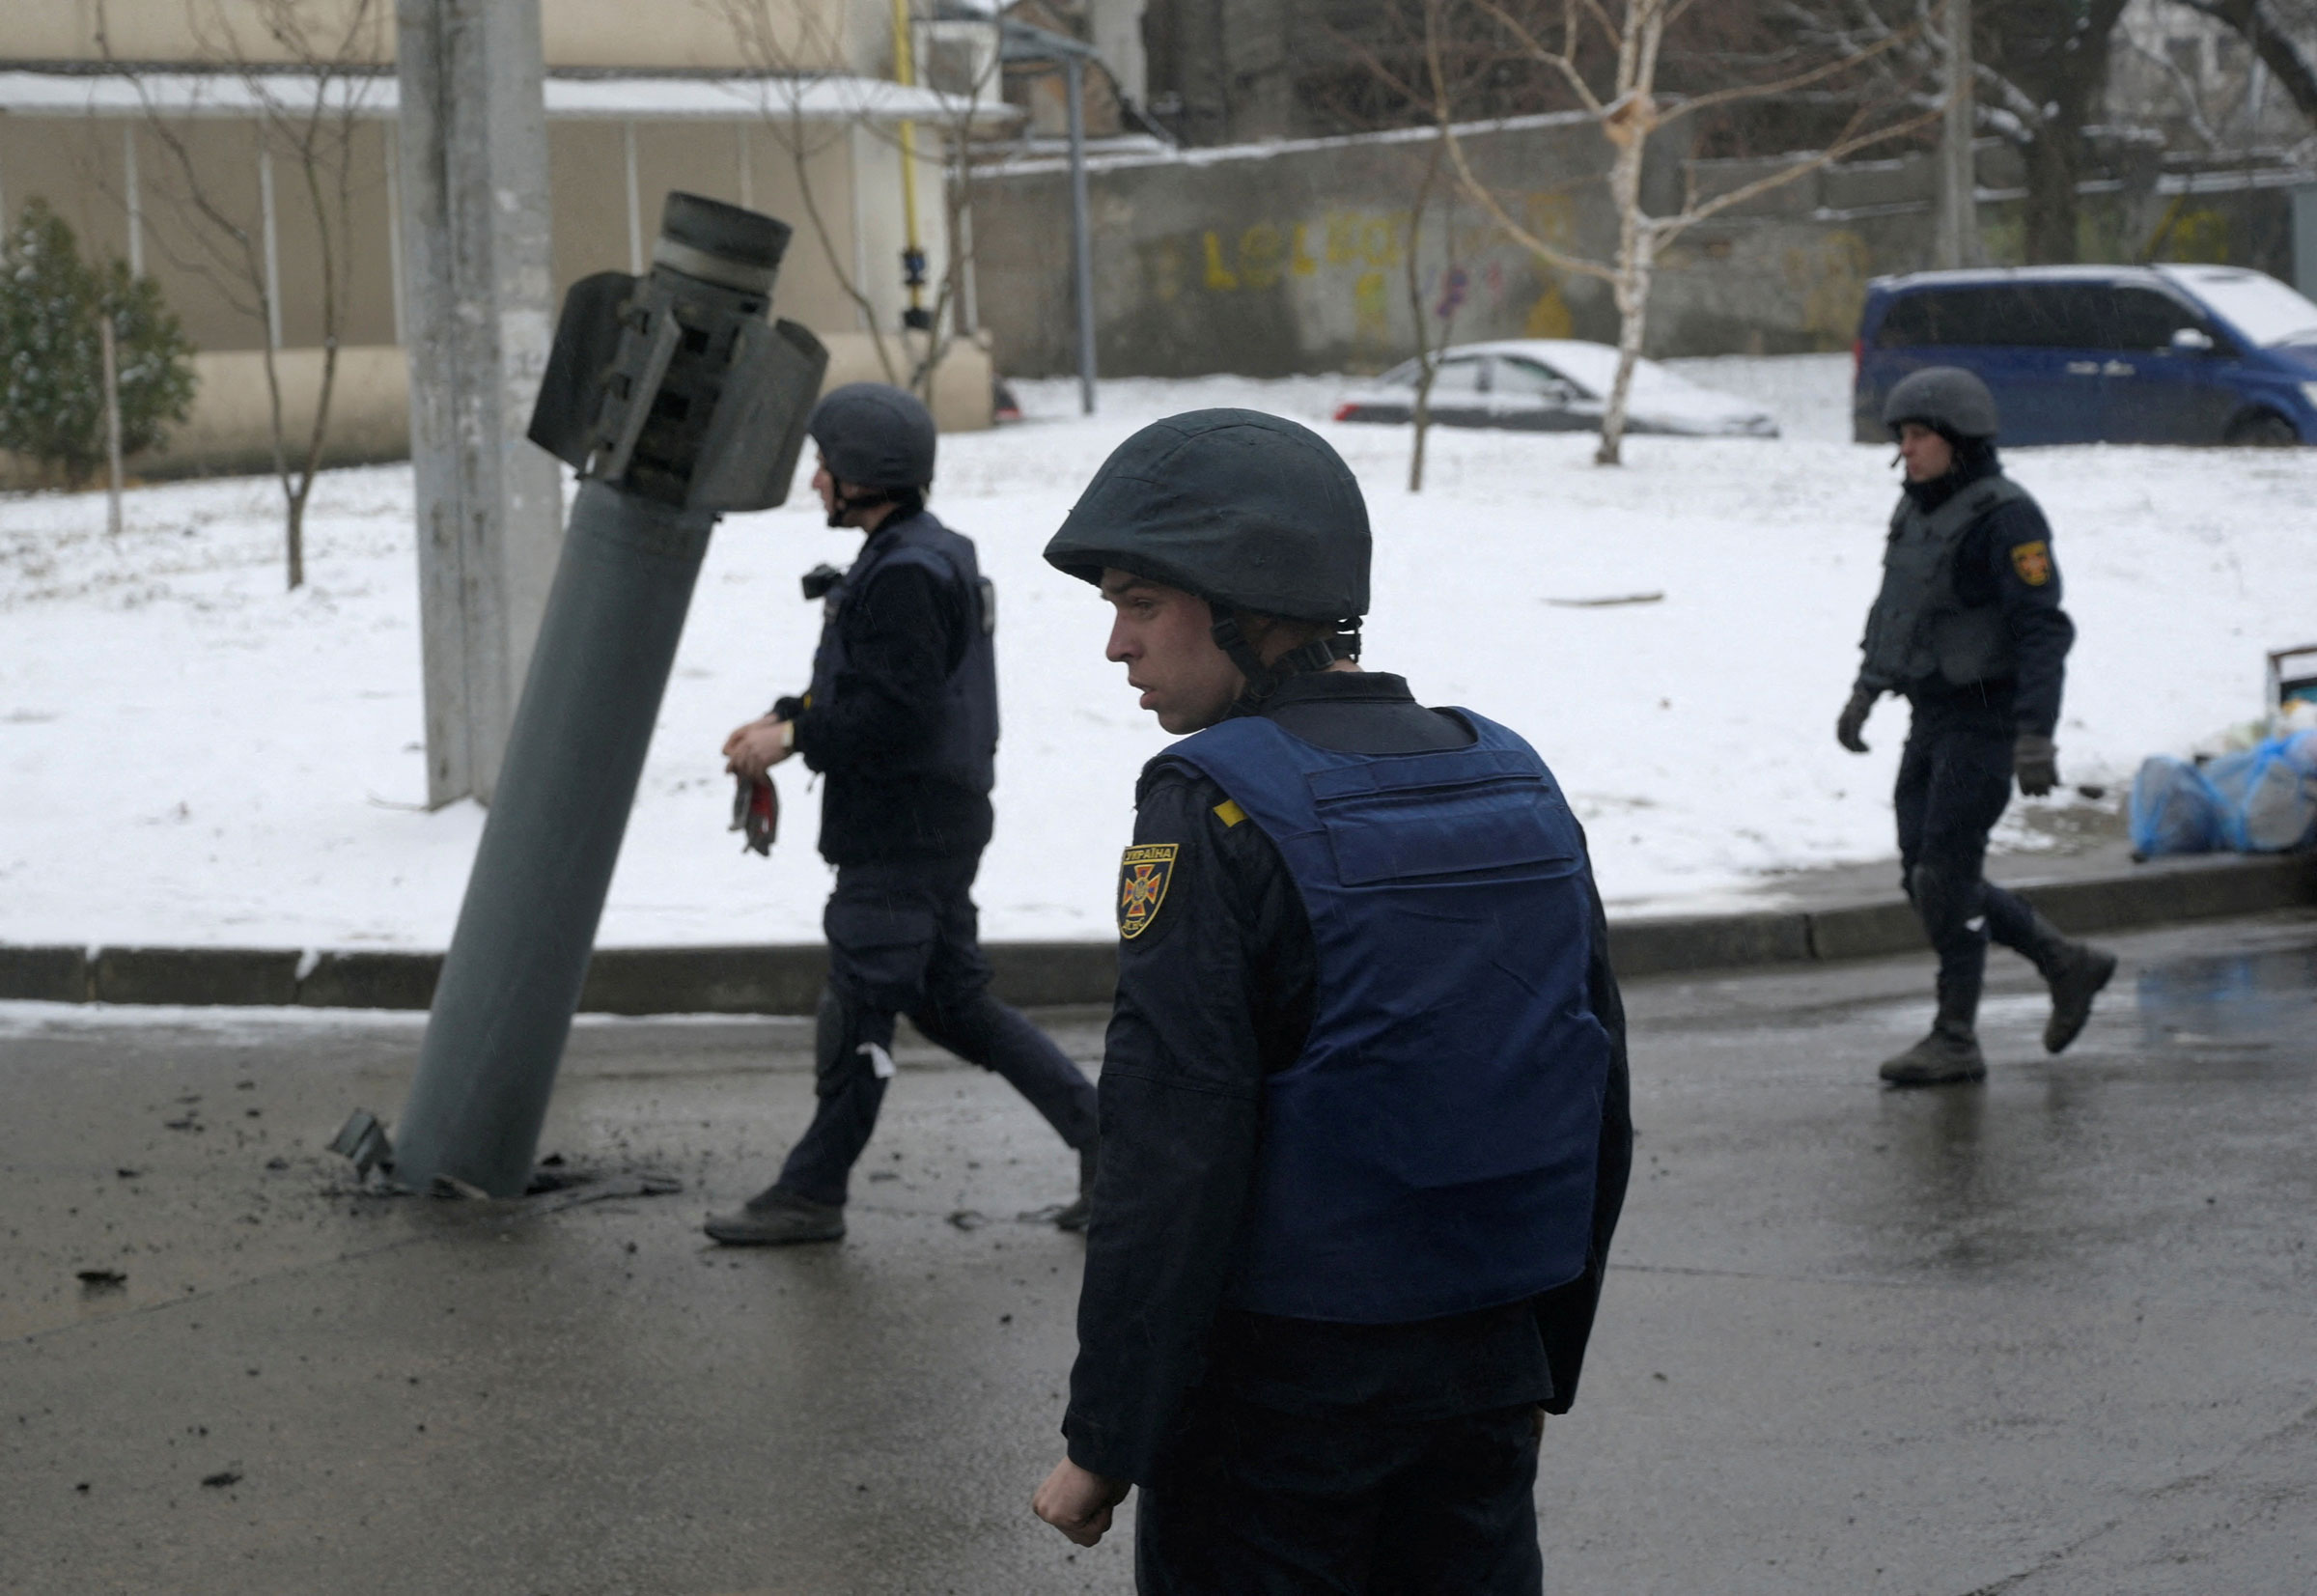 Members of the State Emergency Service of Ukraine walk towards a rocket case stuck in pavement following a recent shelling in Kharkiv on Feb. 25. (Maksim Levin—Reuters)